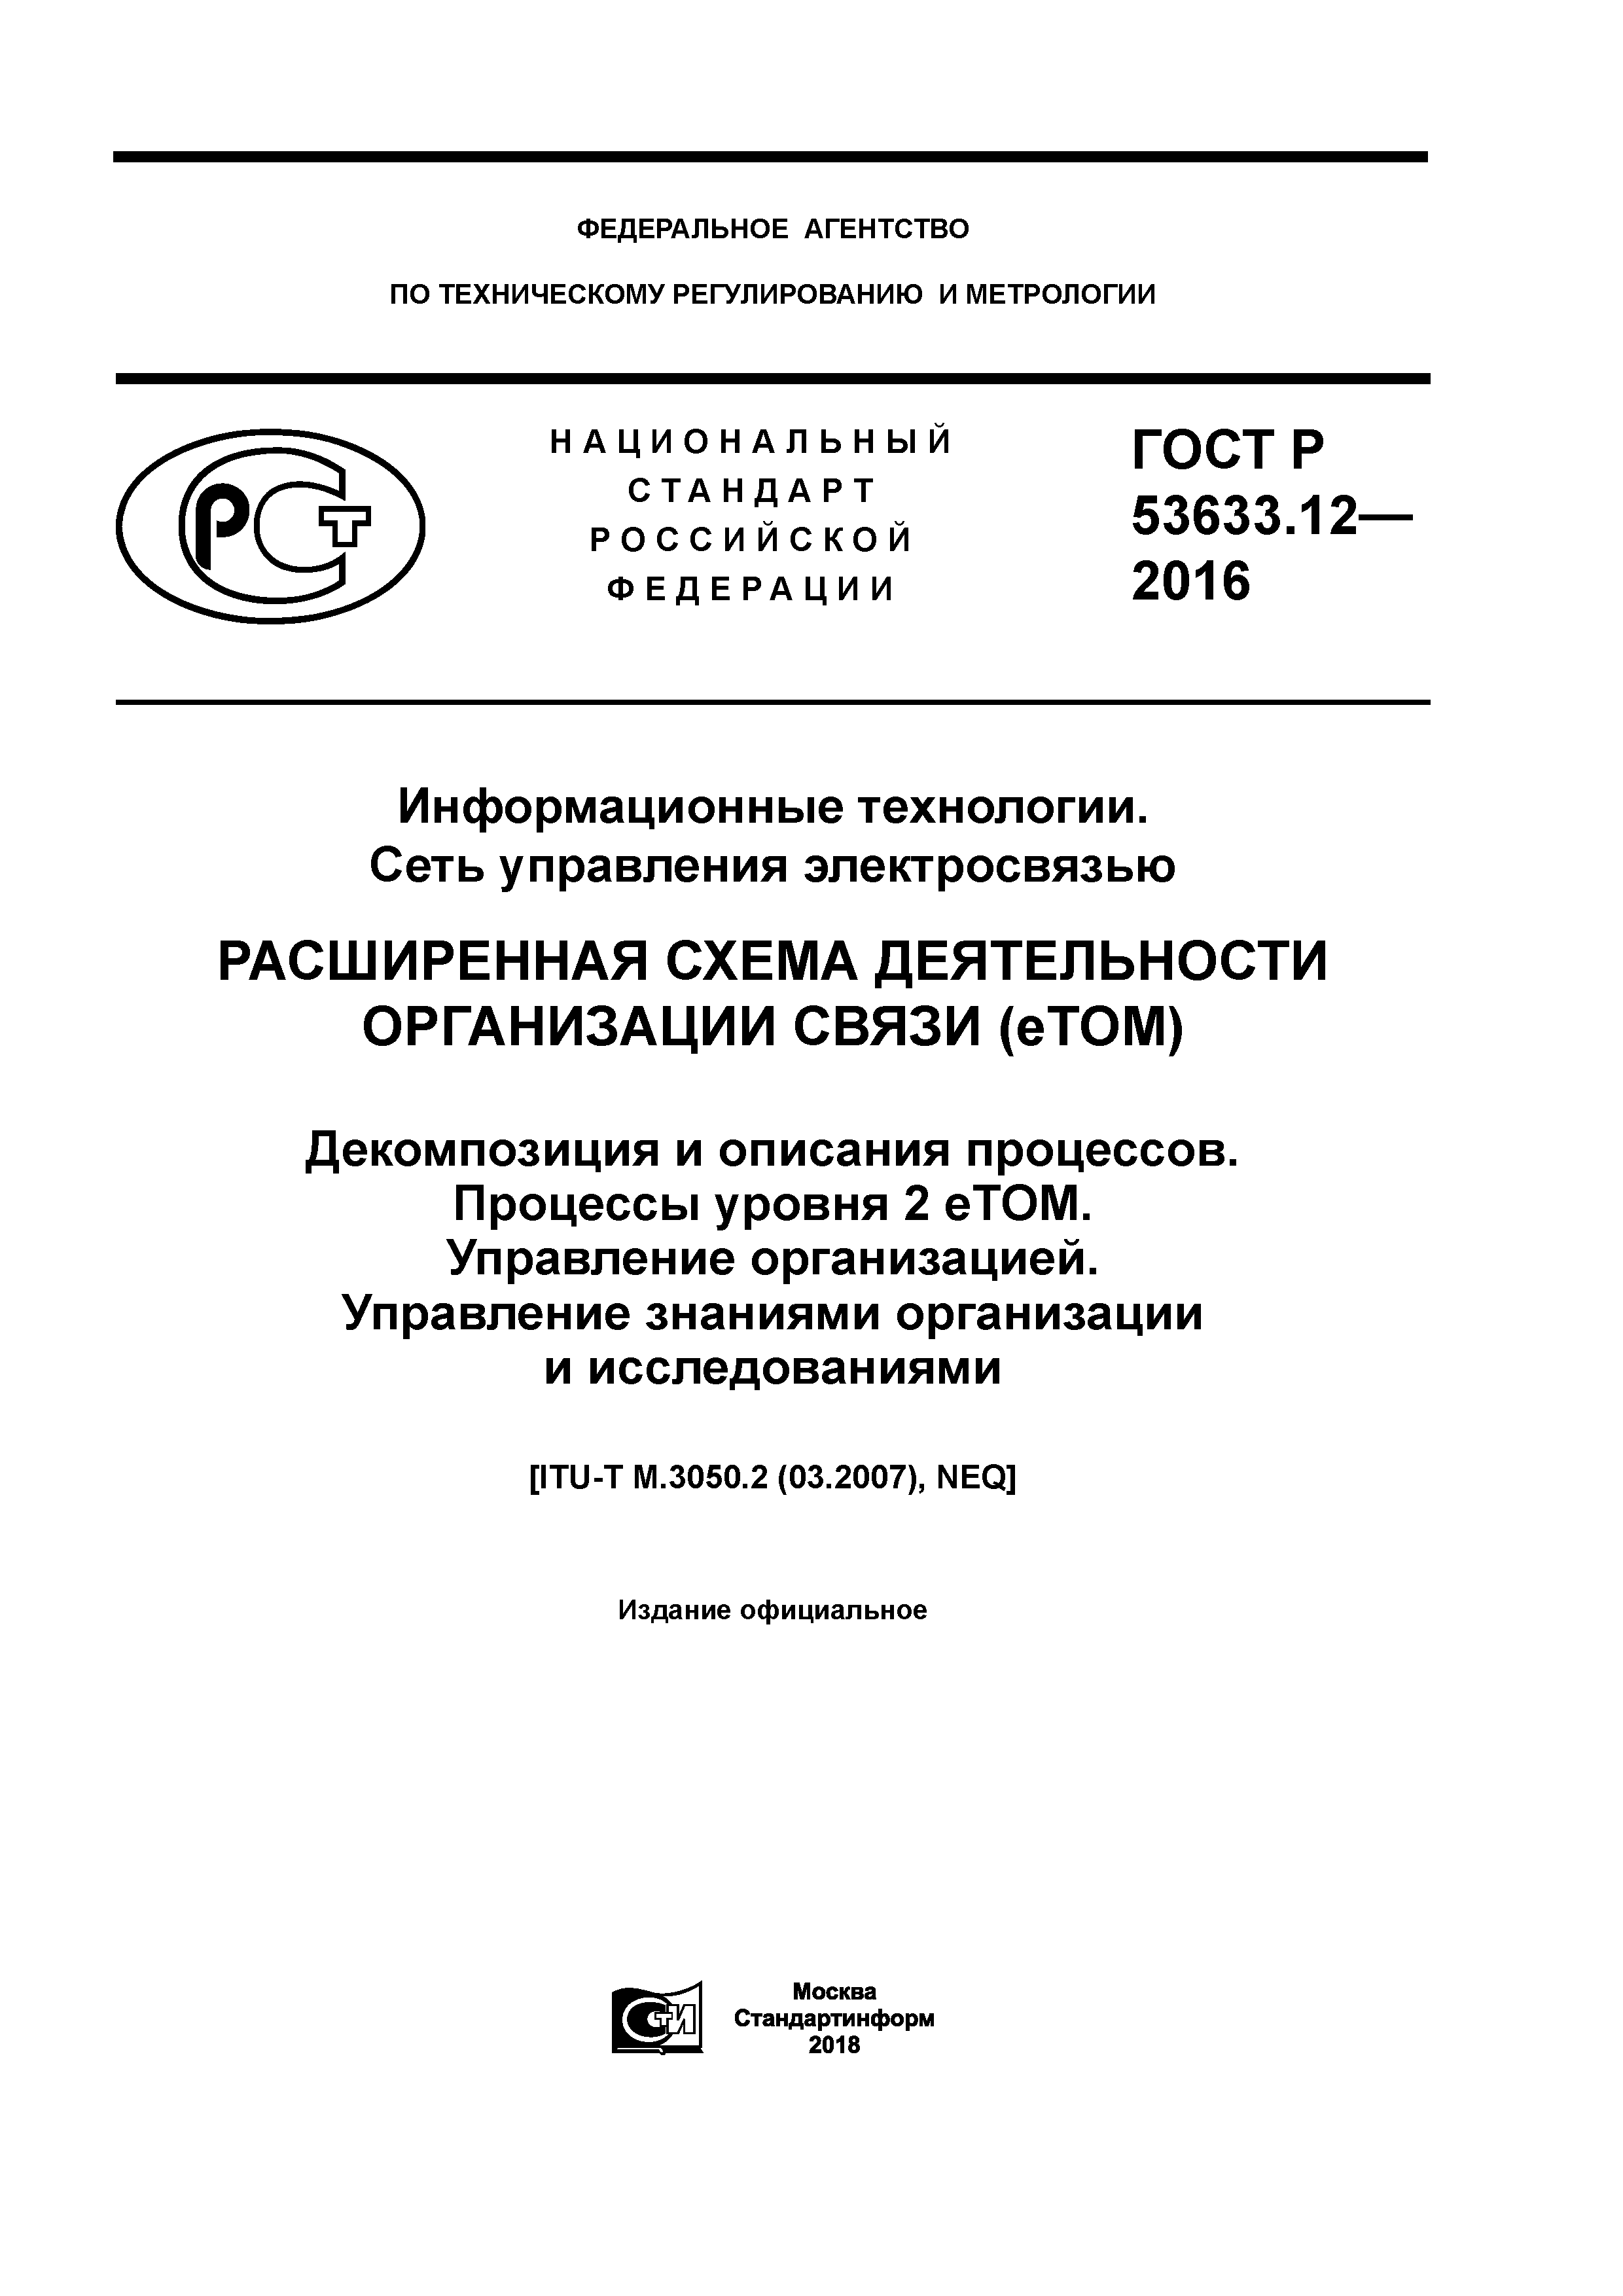 ГОСТ Р 53633.12-2016